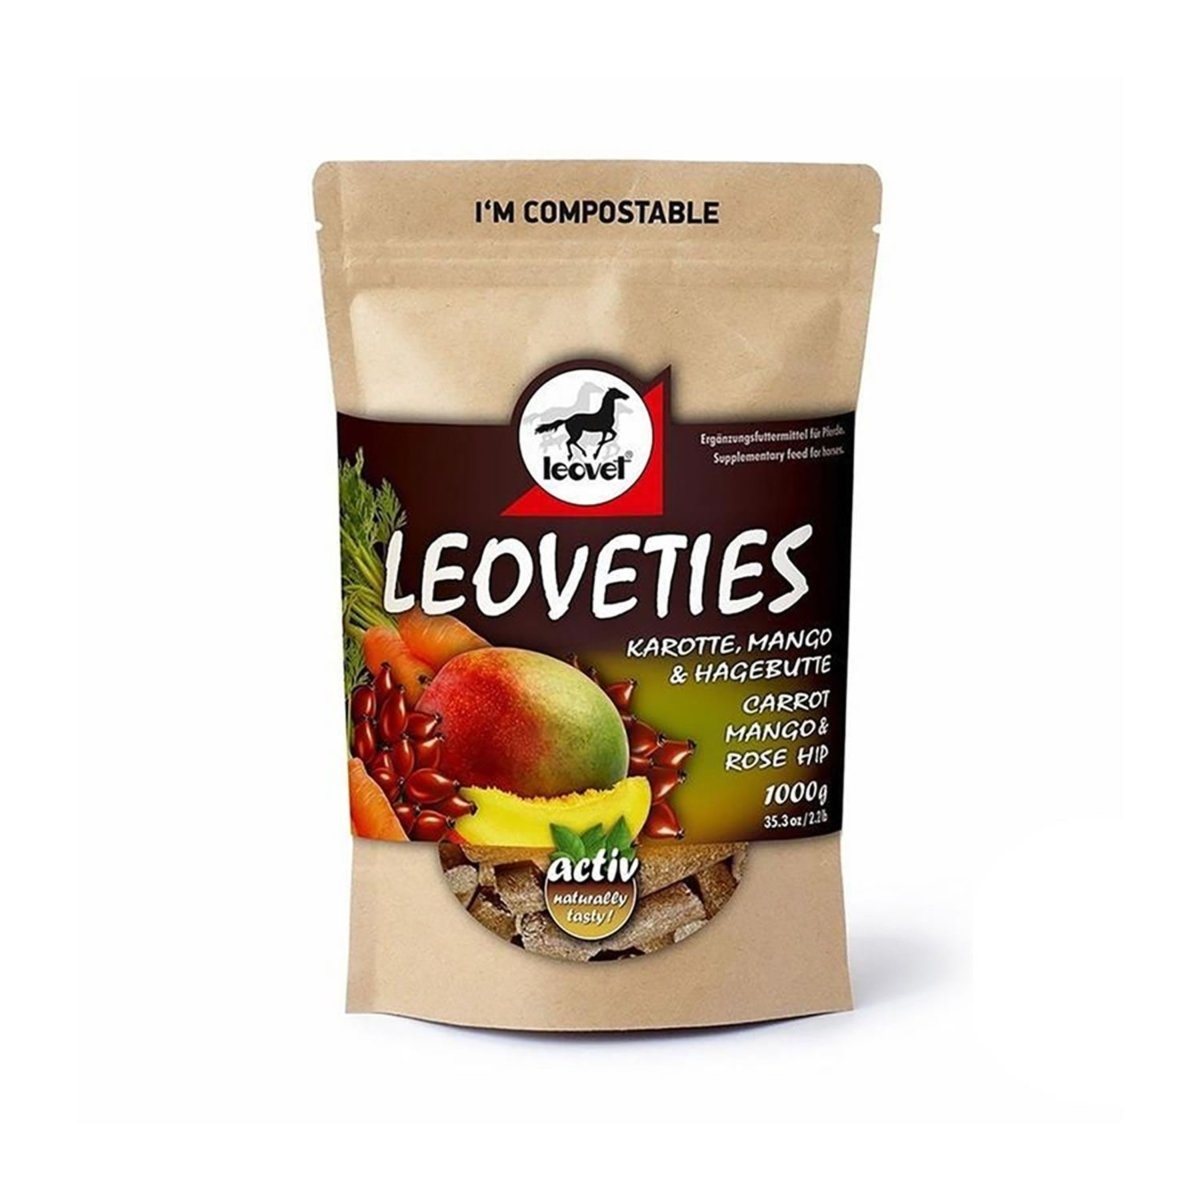 Leoveties Horse Treats - Carrot, Mango & Rosehip - 1Kg